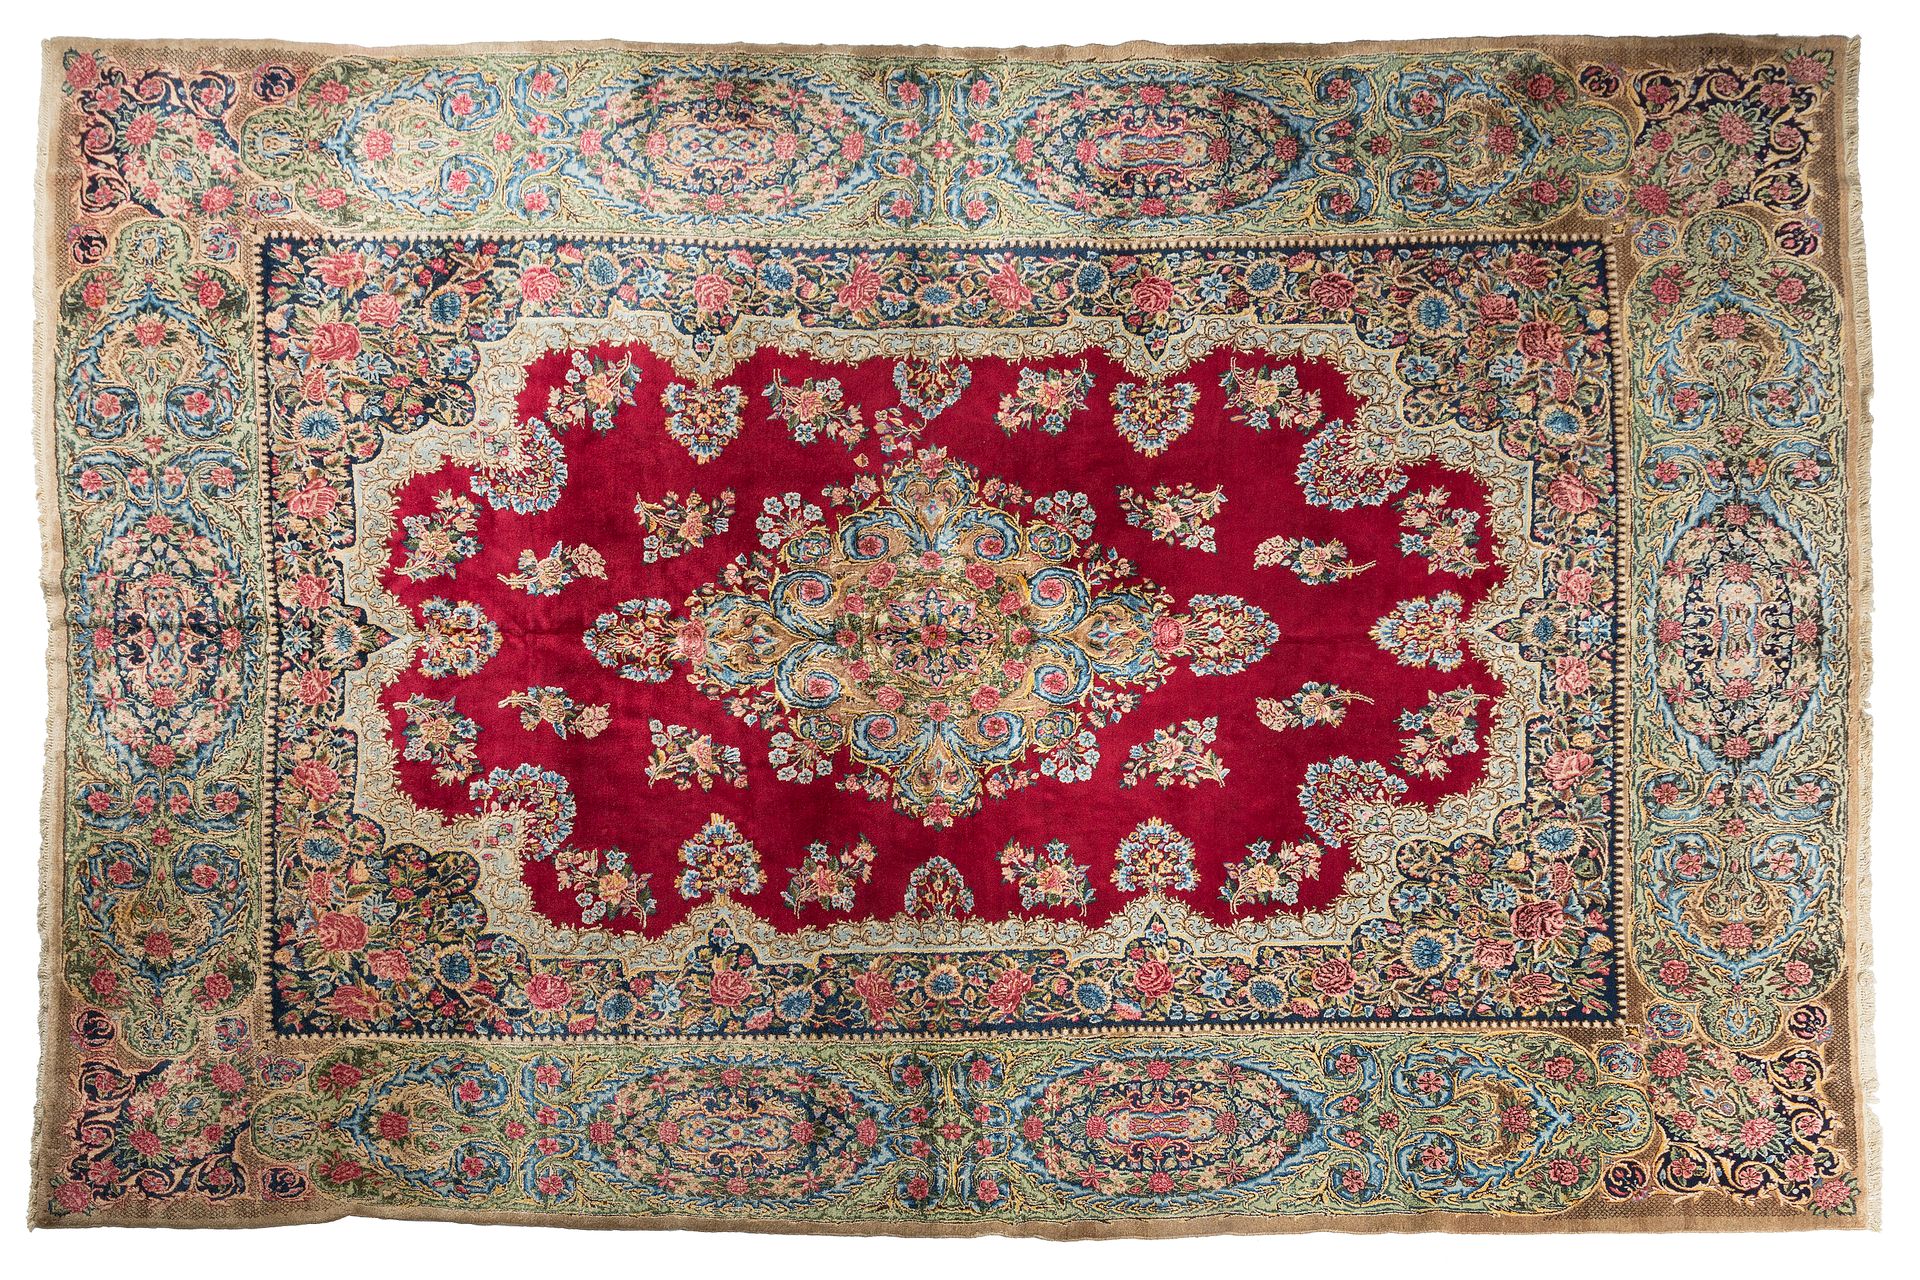 Null 基尔曼地毯（伊朗），20世纪后半叶

尺寸：400 x 290厘米。

技术特点 : 羊毛丝绒，棉质基础。

一个崇高的菱形奖章，多叶和植被，古金，有&hellip;